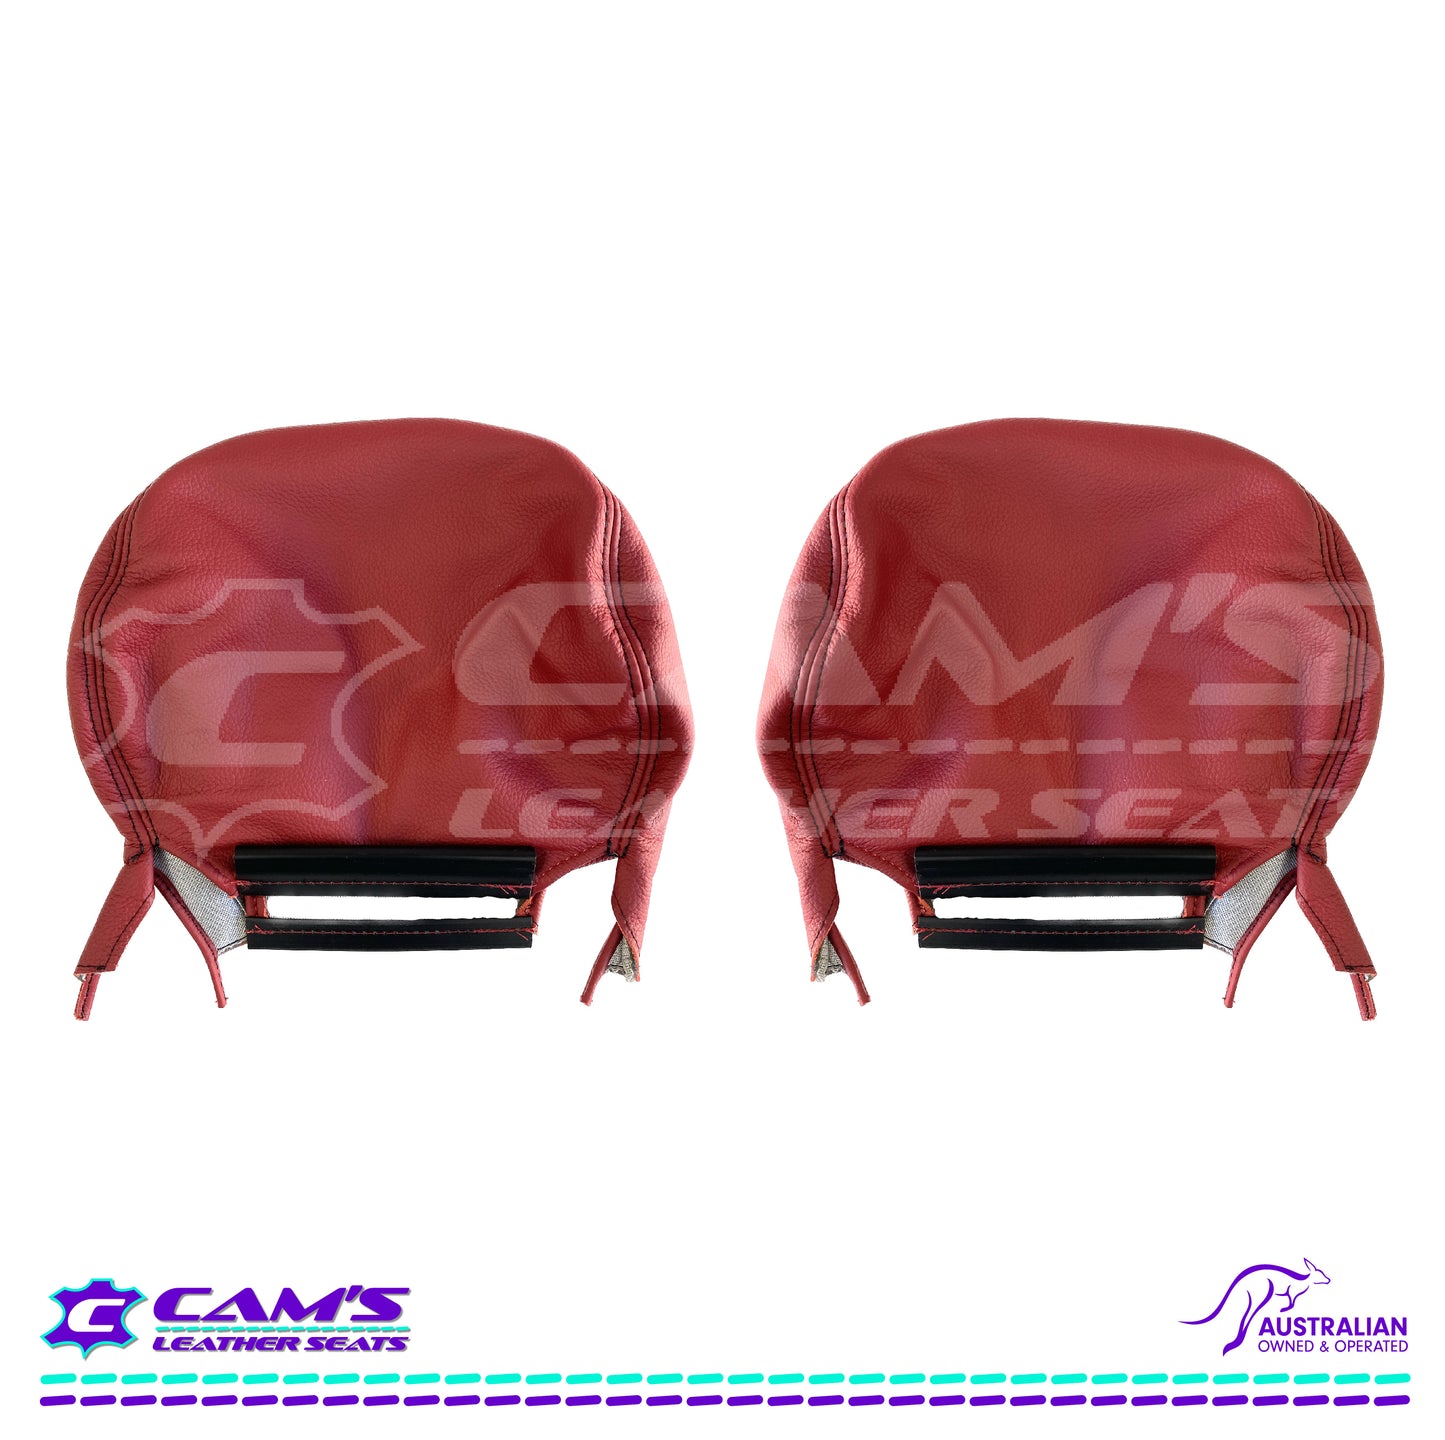 LEATHER SEATS TRIM KIT FOR VY/VZ SS SEDAN FRONT & REAR SEATS RED/BLACK DIAMOND